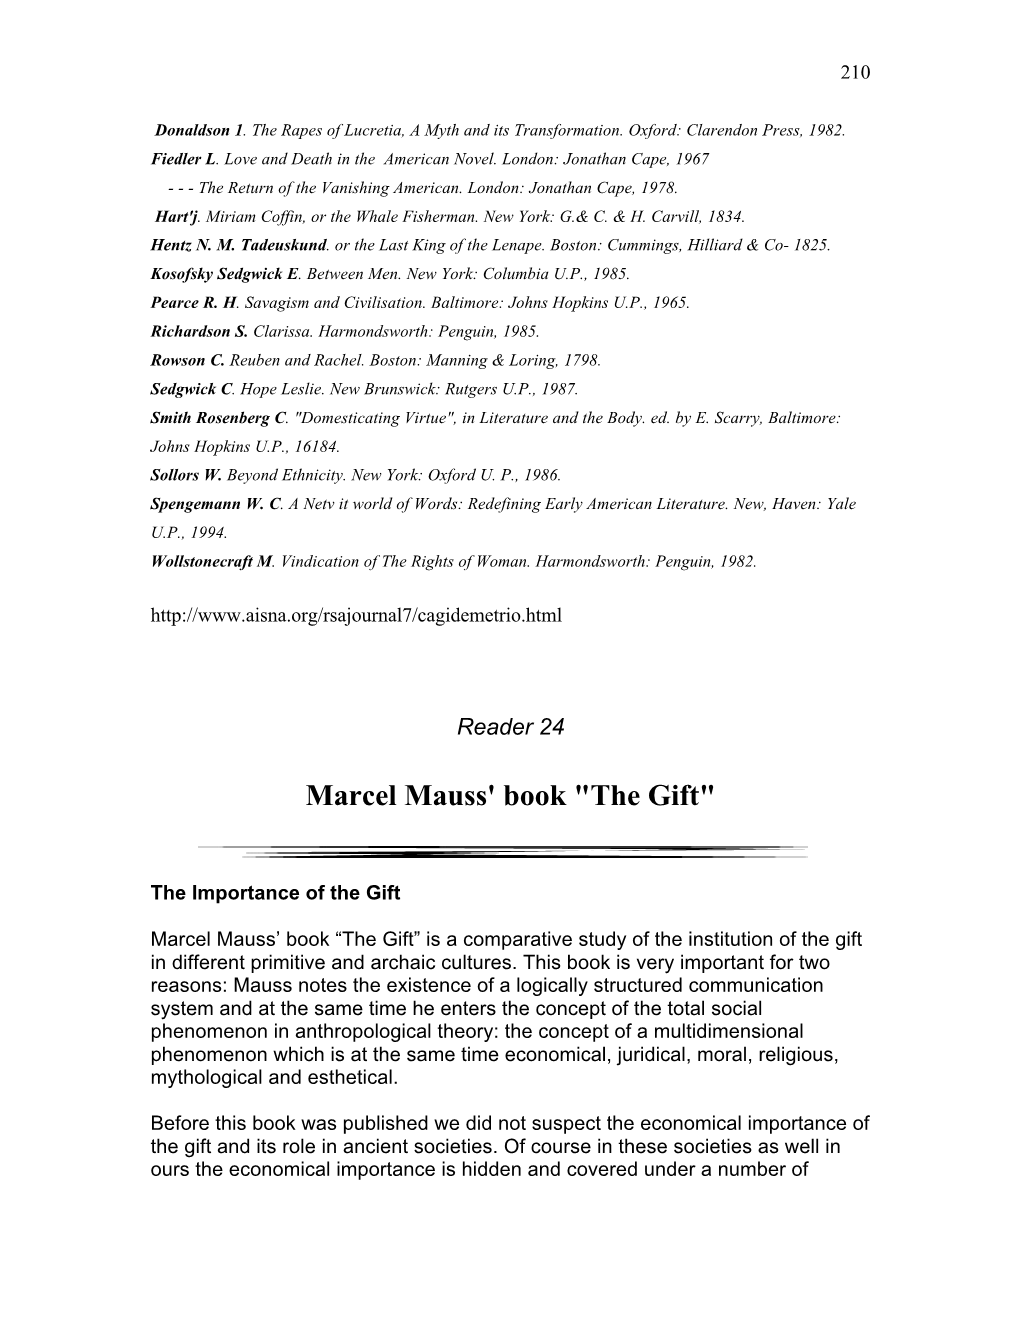 Marcel Mauss' Book "The Gift"